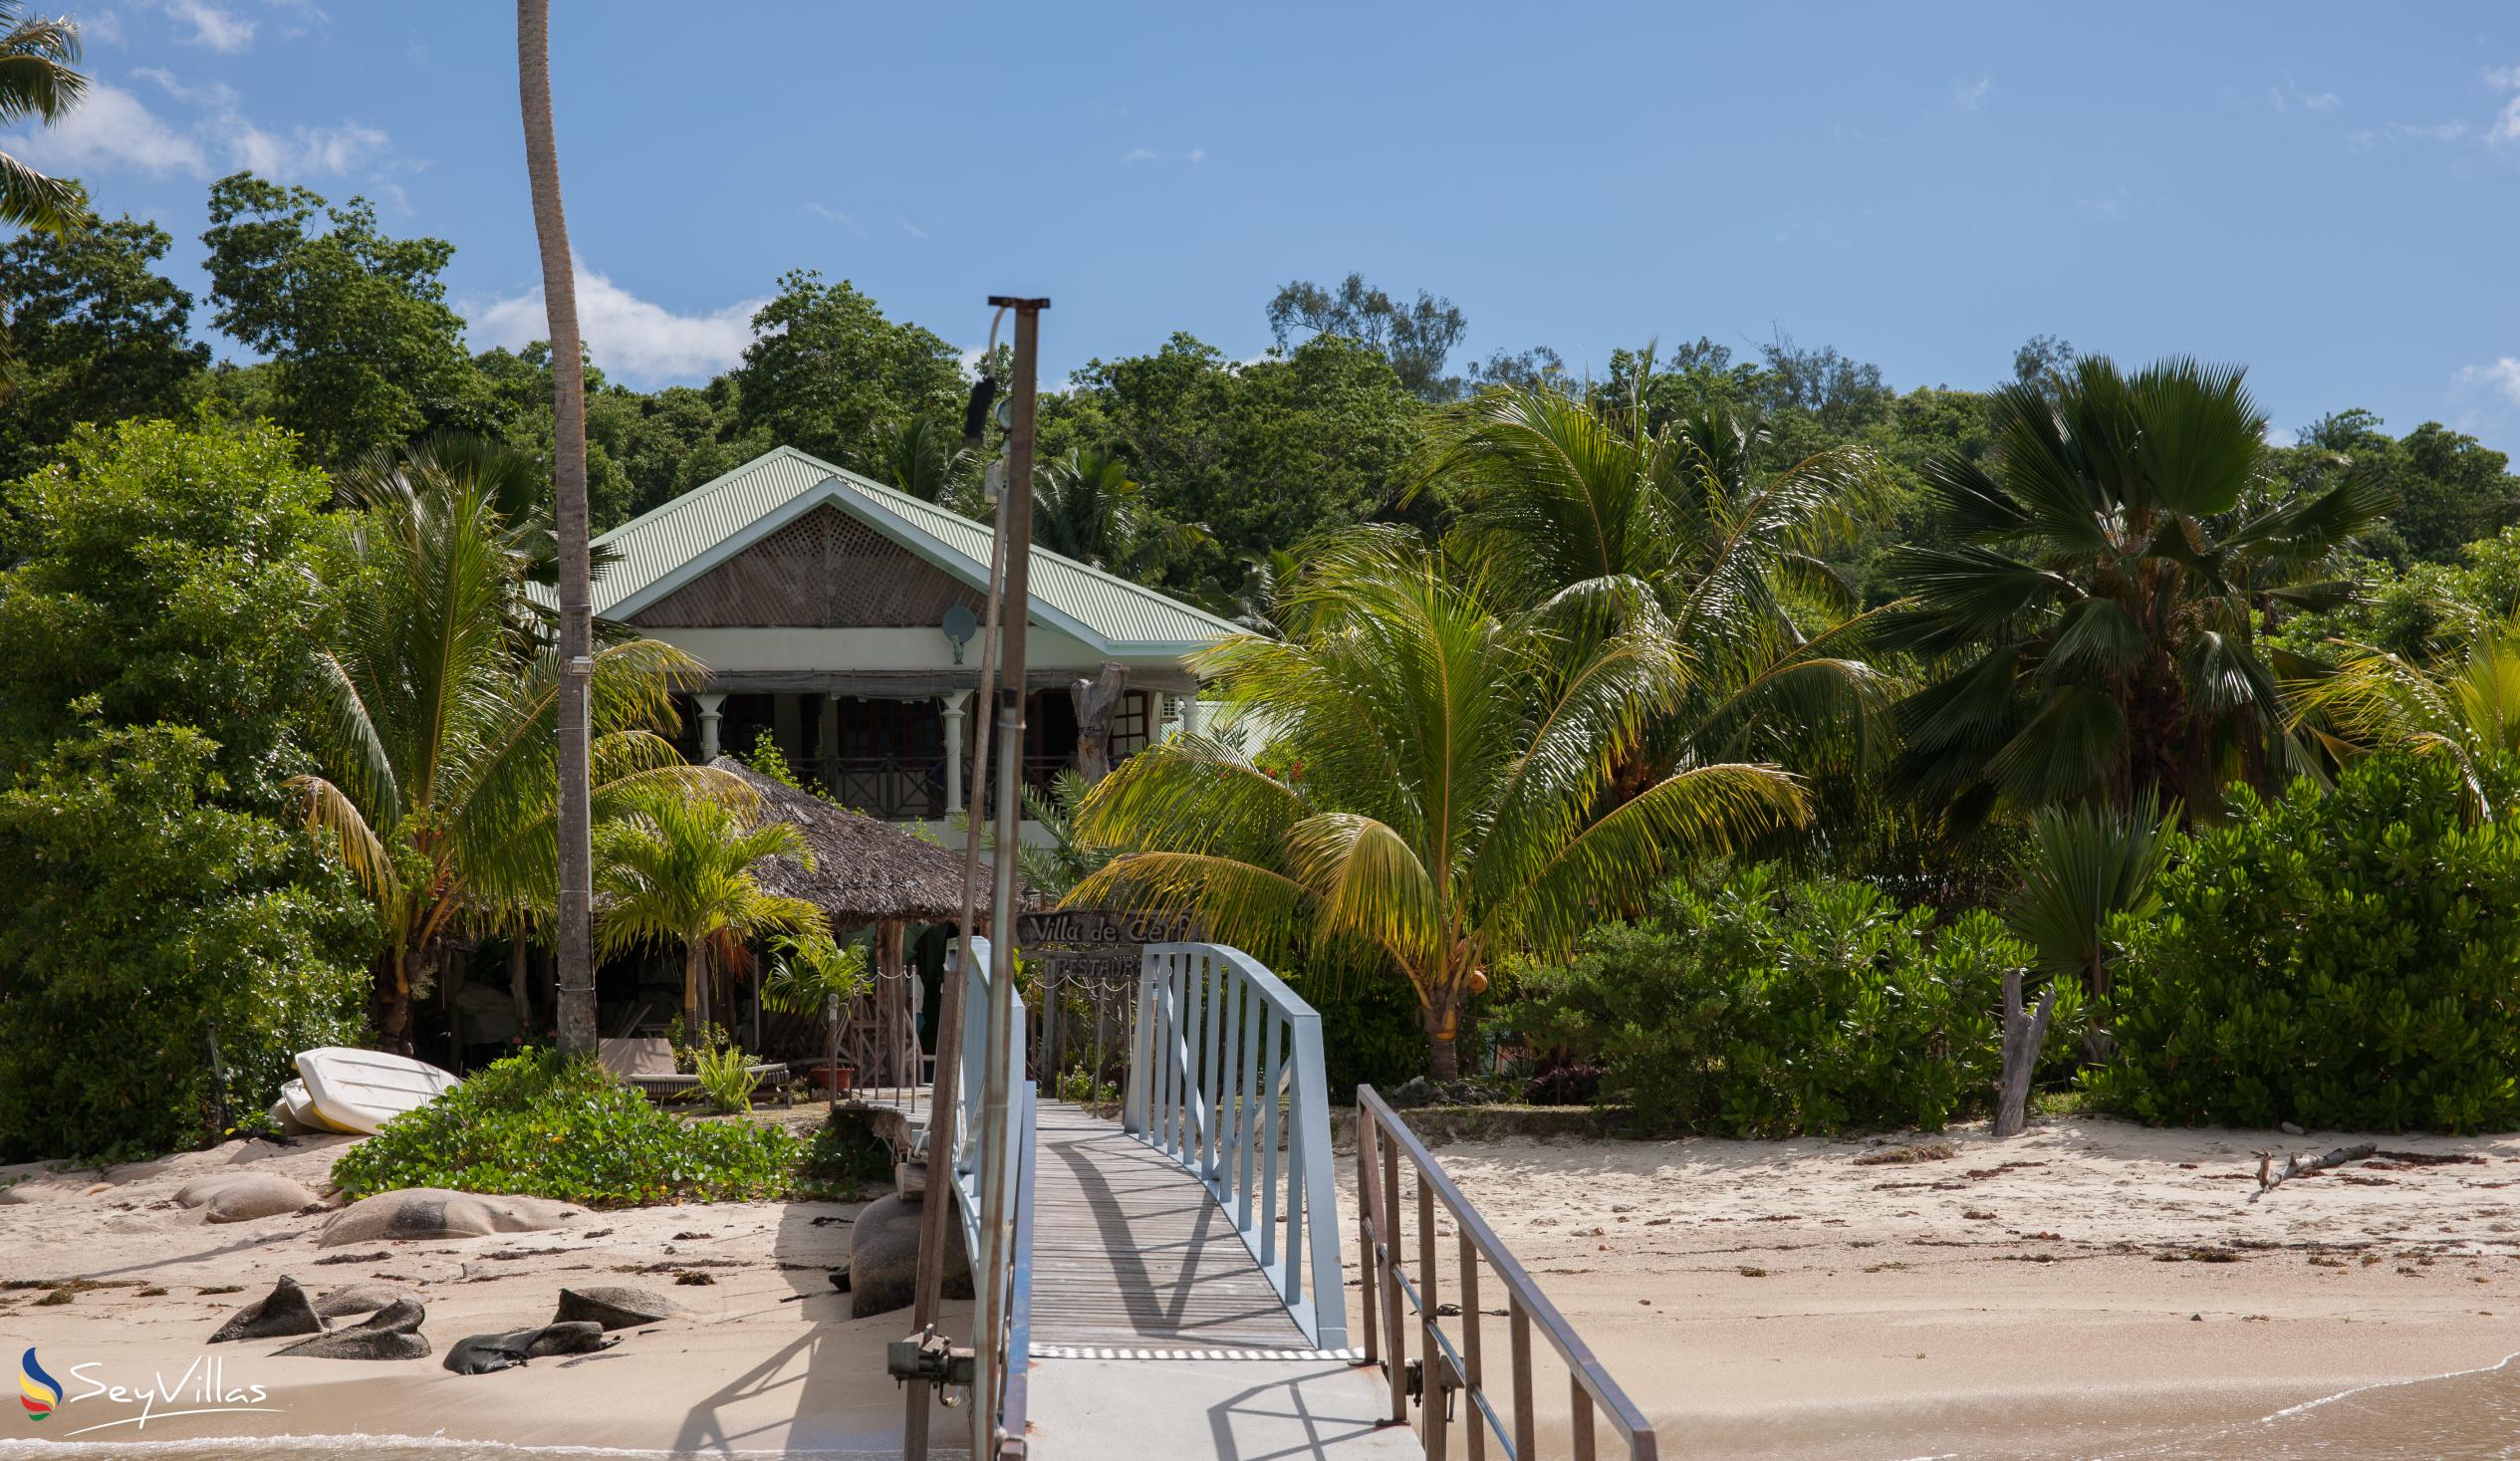 Foto 45: Villa de Cerf - Lage - Cerf Island (Seychellen)